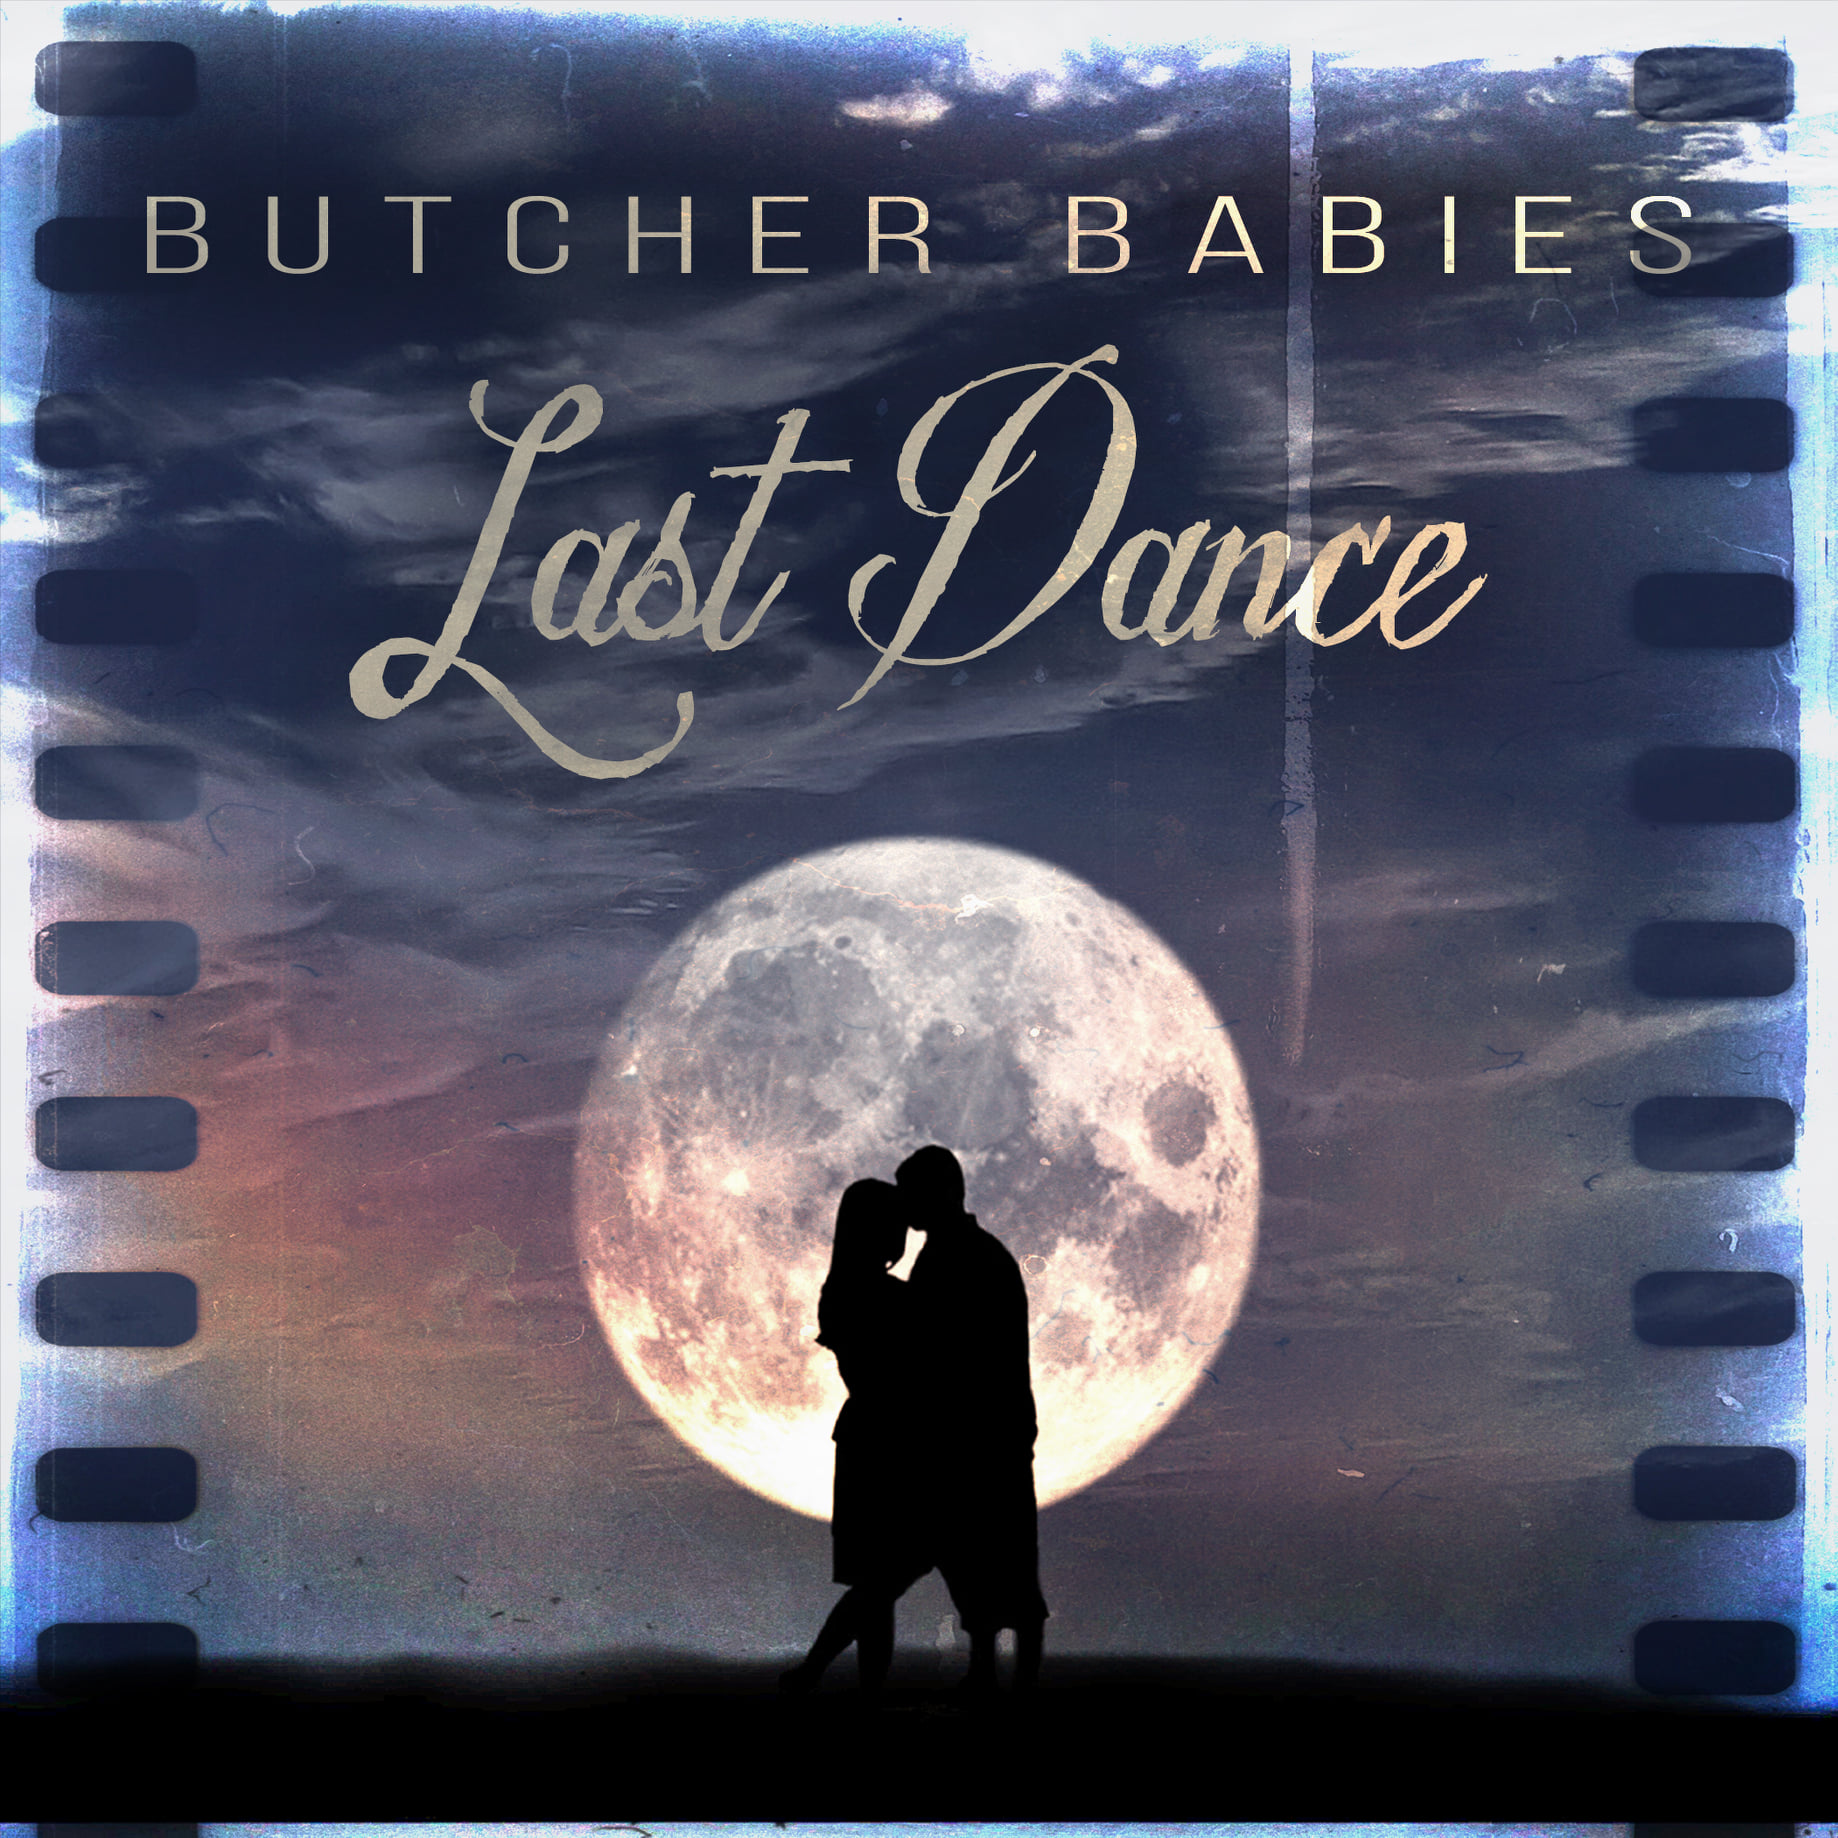 Butcher Babies "Last Dance"